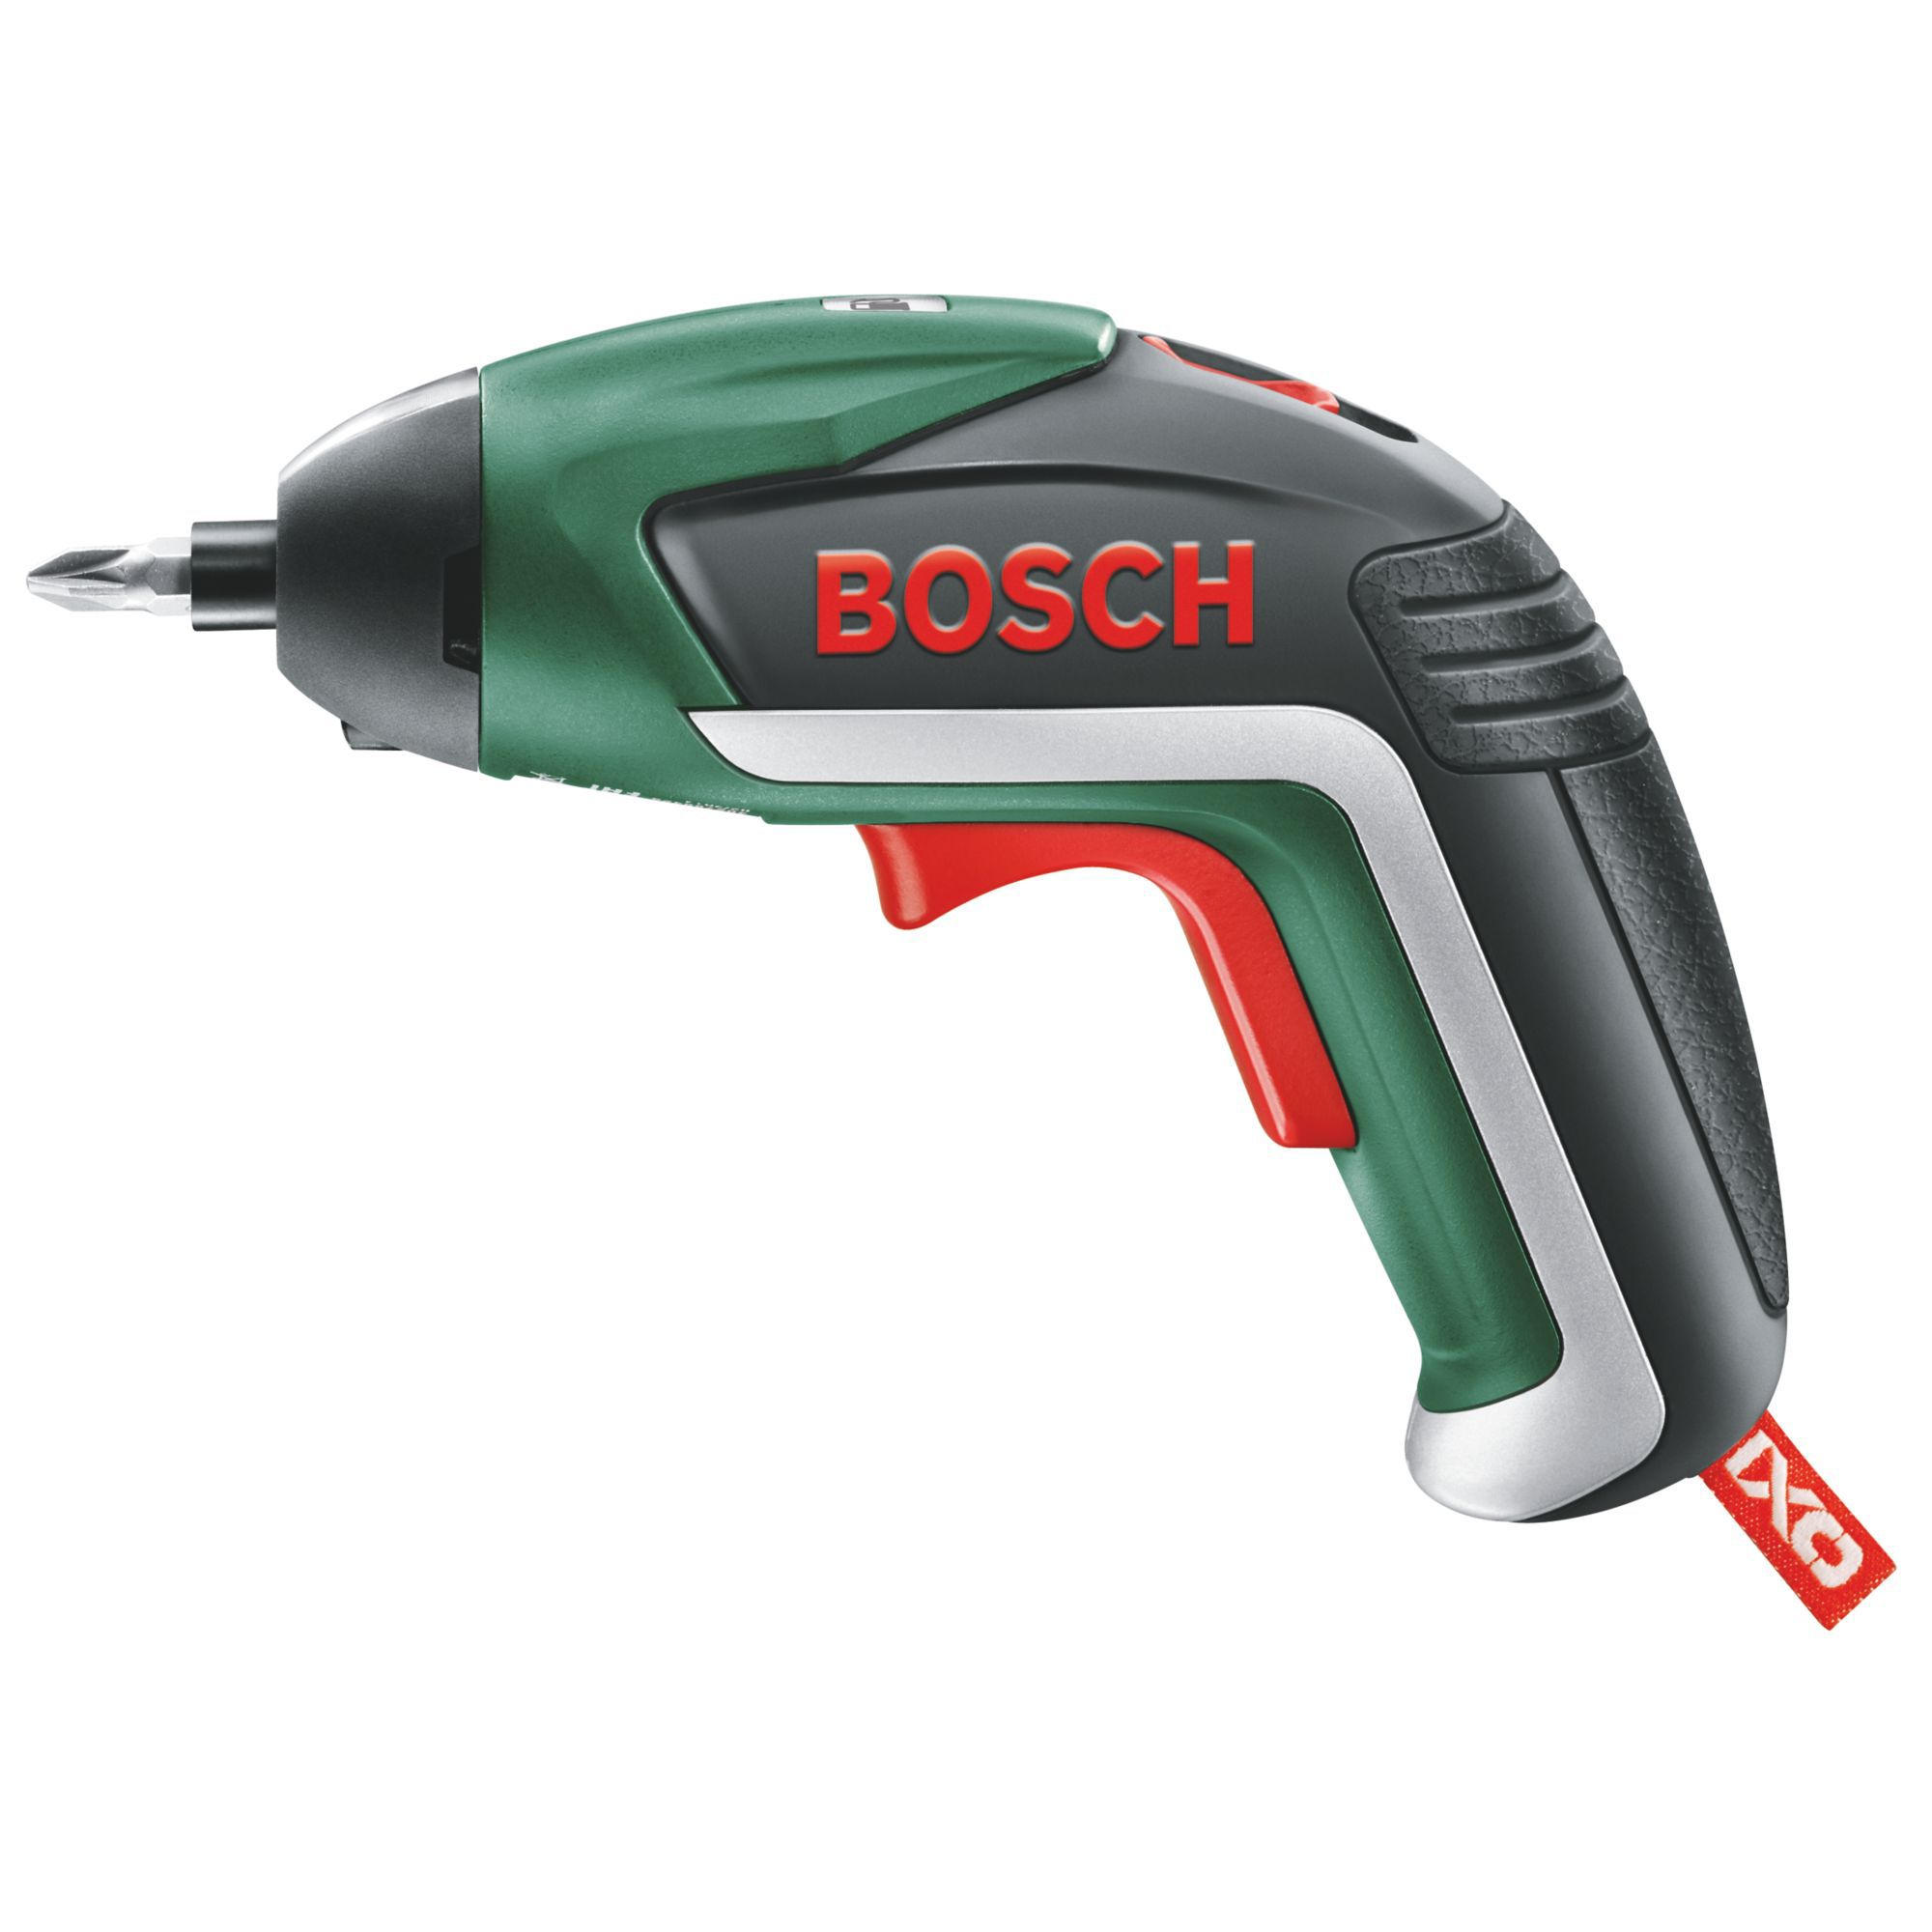 Bosch 3.6V Li-ion Cordless Screwdriver